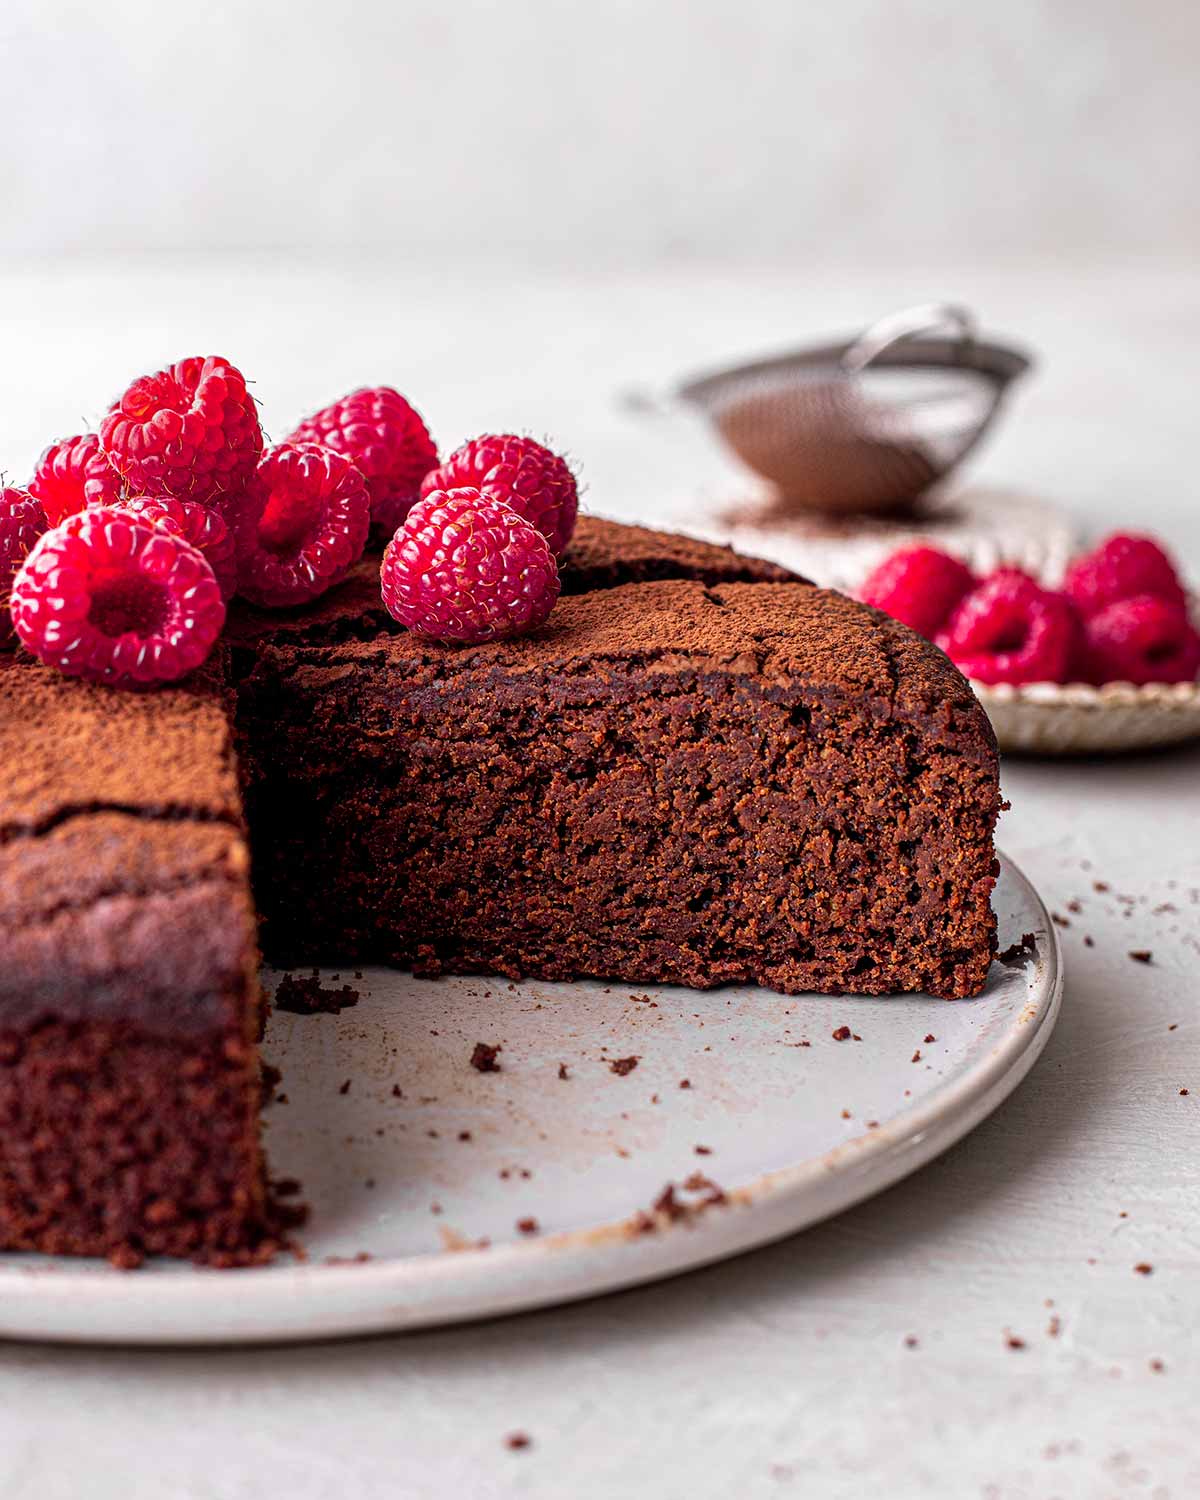 Close up of fudge like texture of chocolate cake.